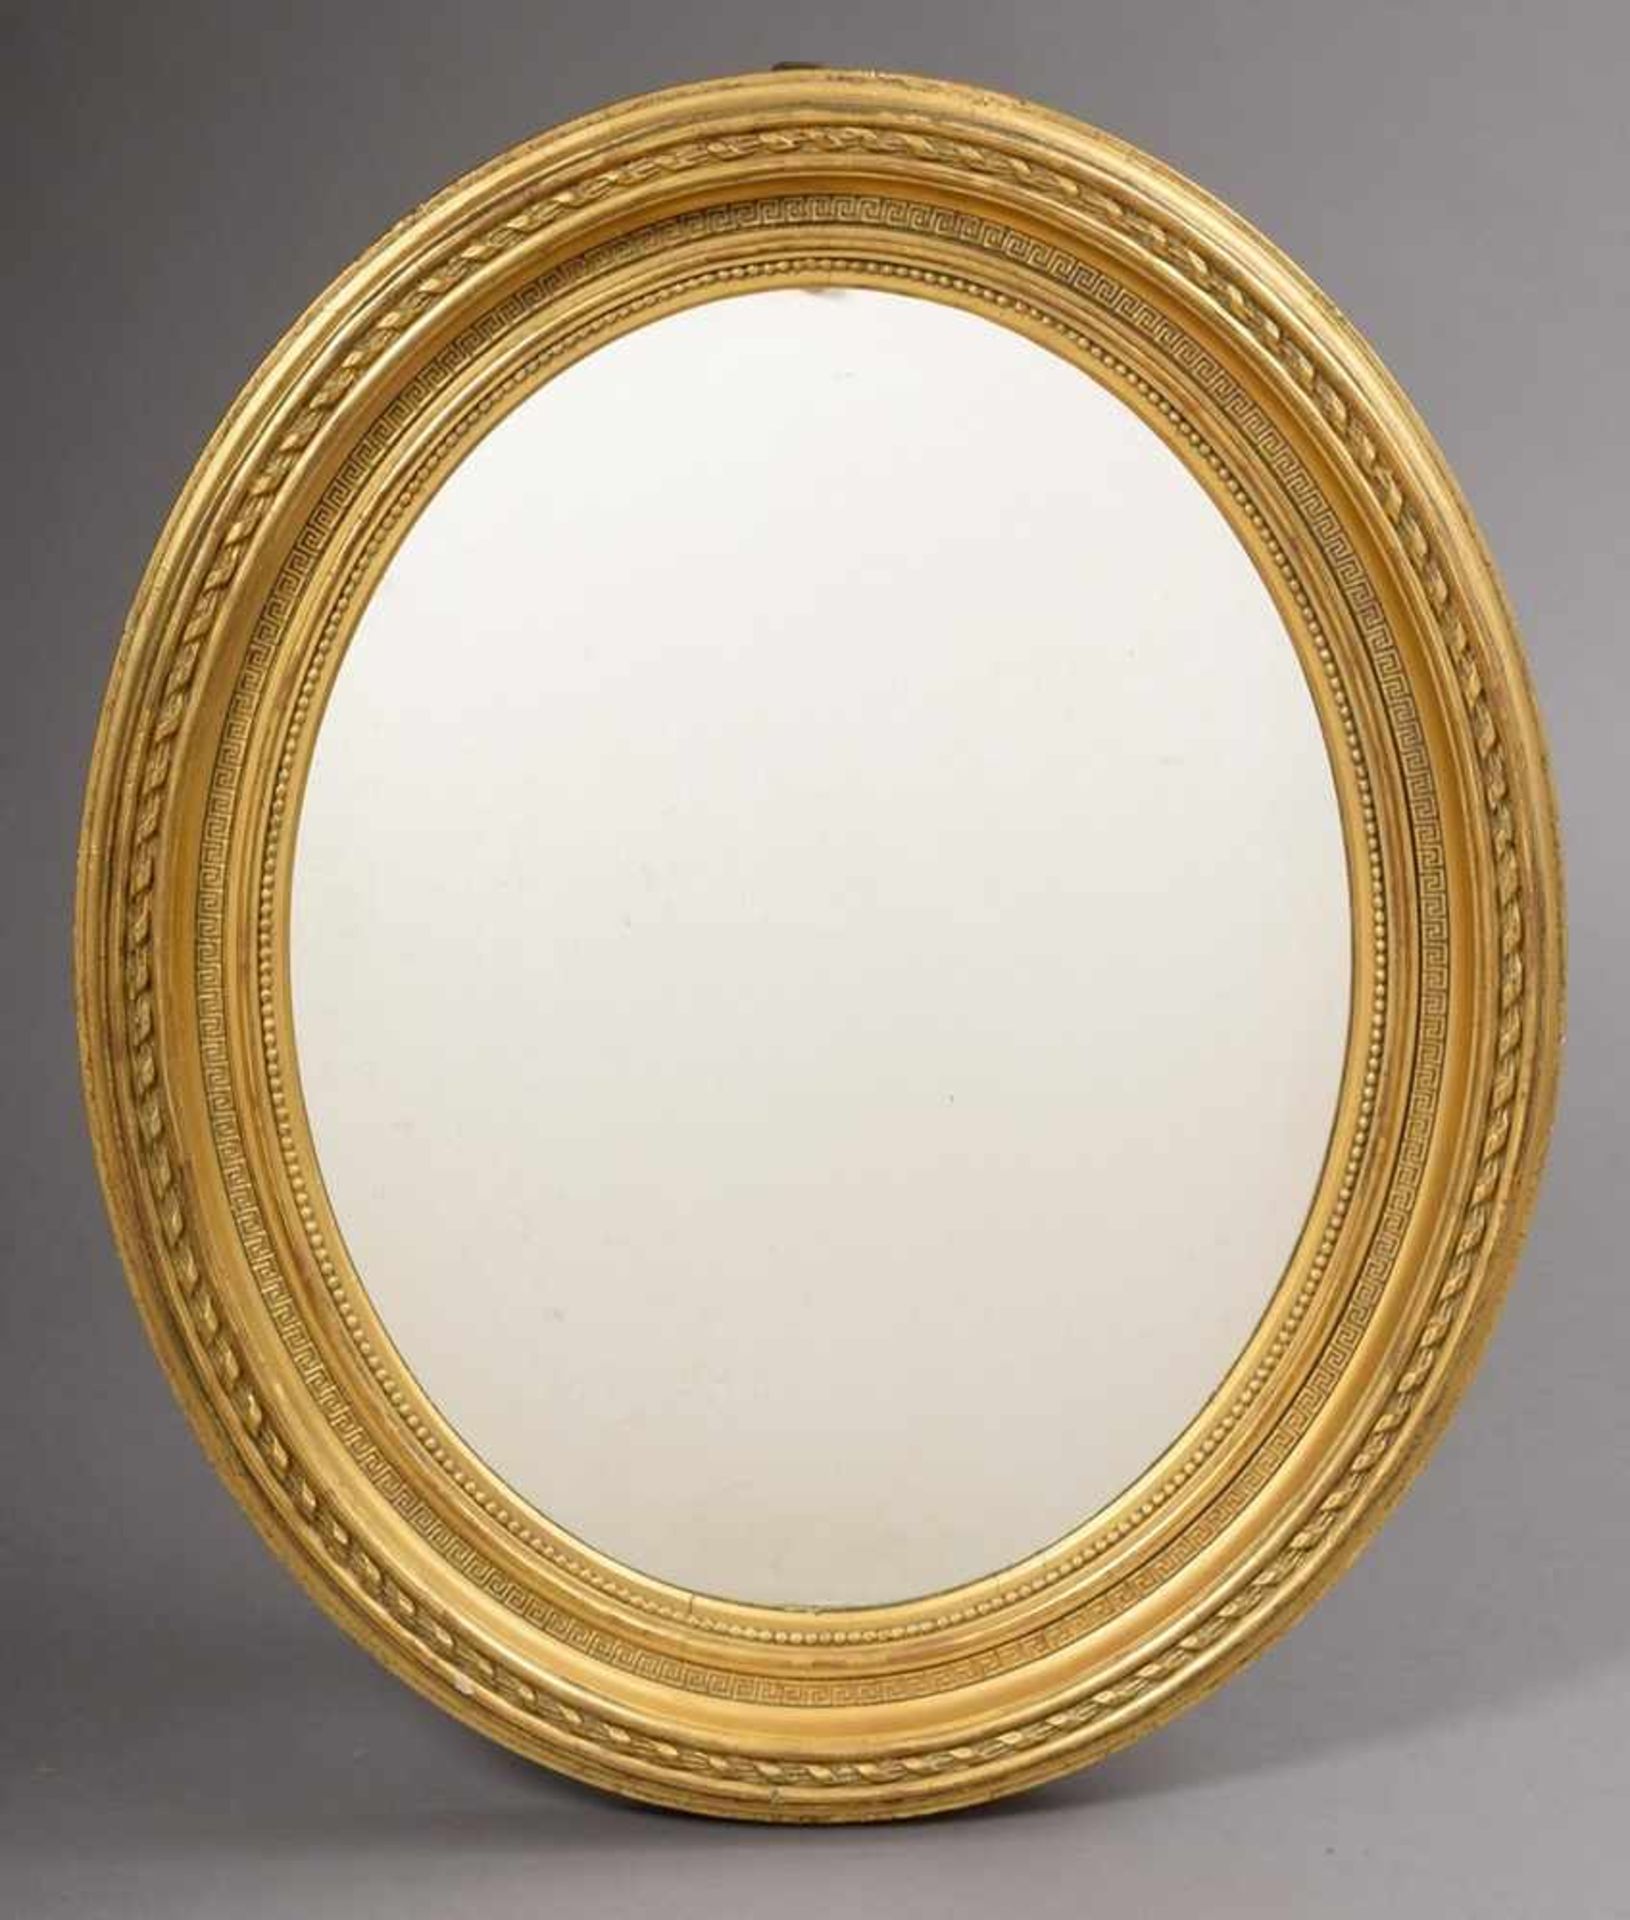 Ovaler Spätbiedermeier Spiegel in ornamentiertem, vergoldetem Stuckrahmen, 71x60,5cmOval late